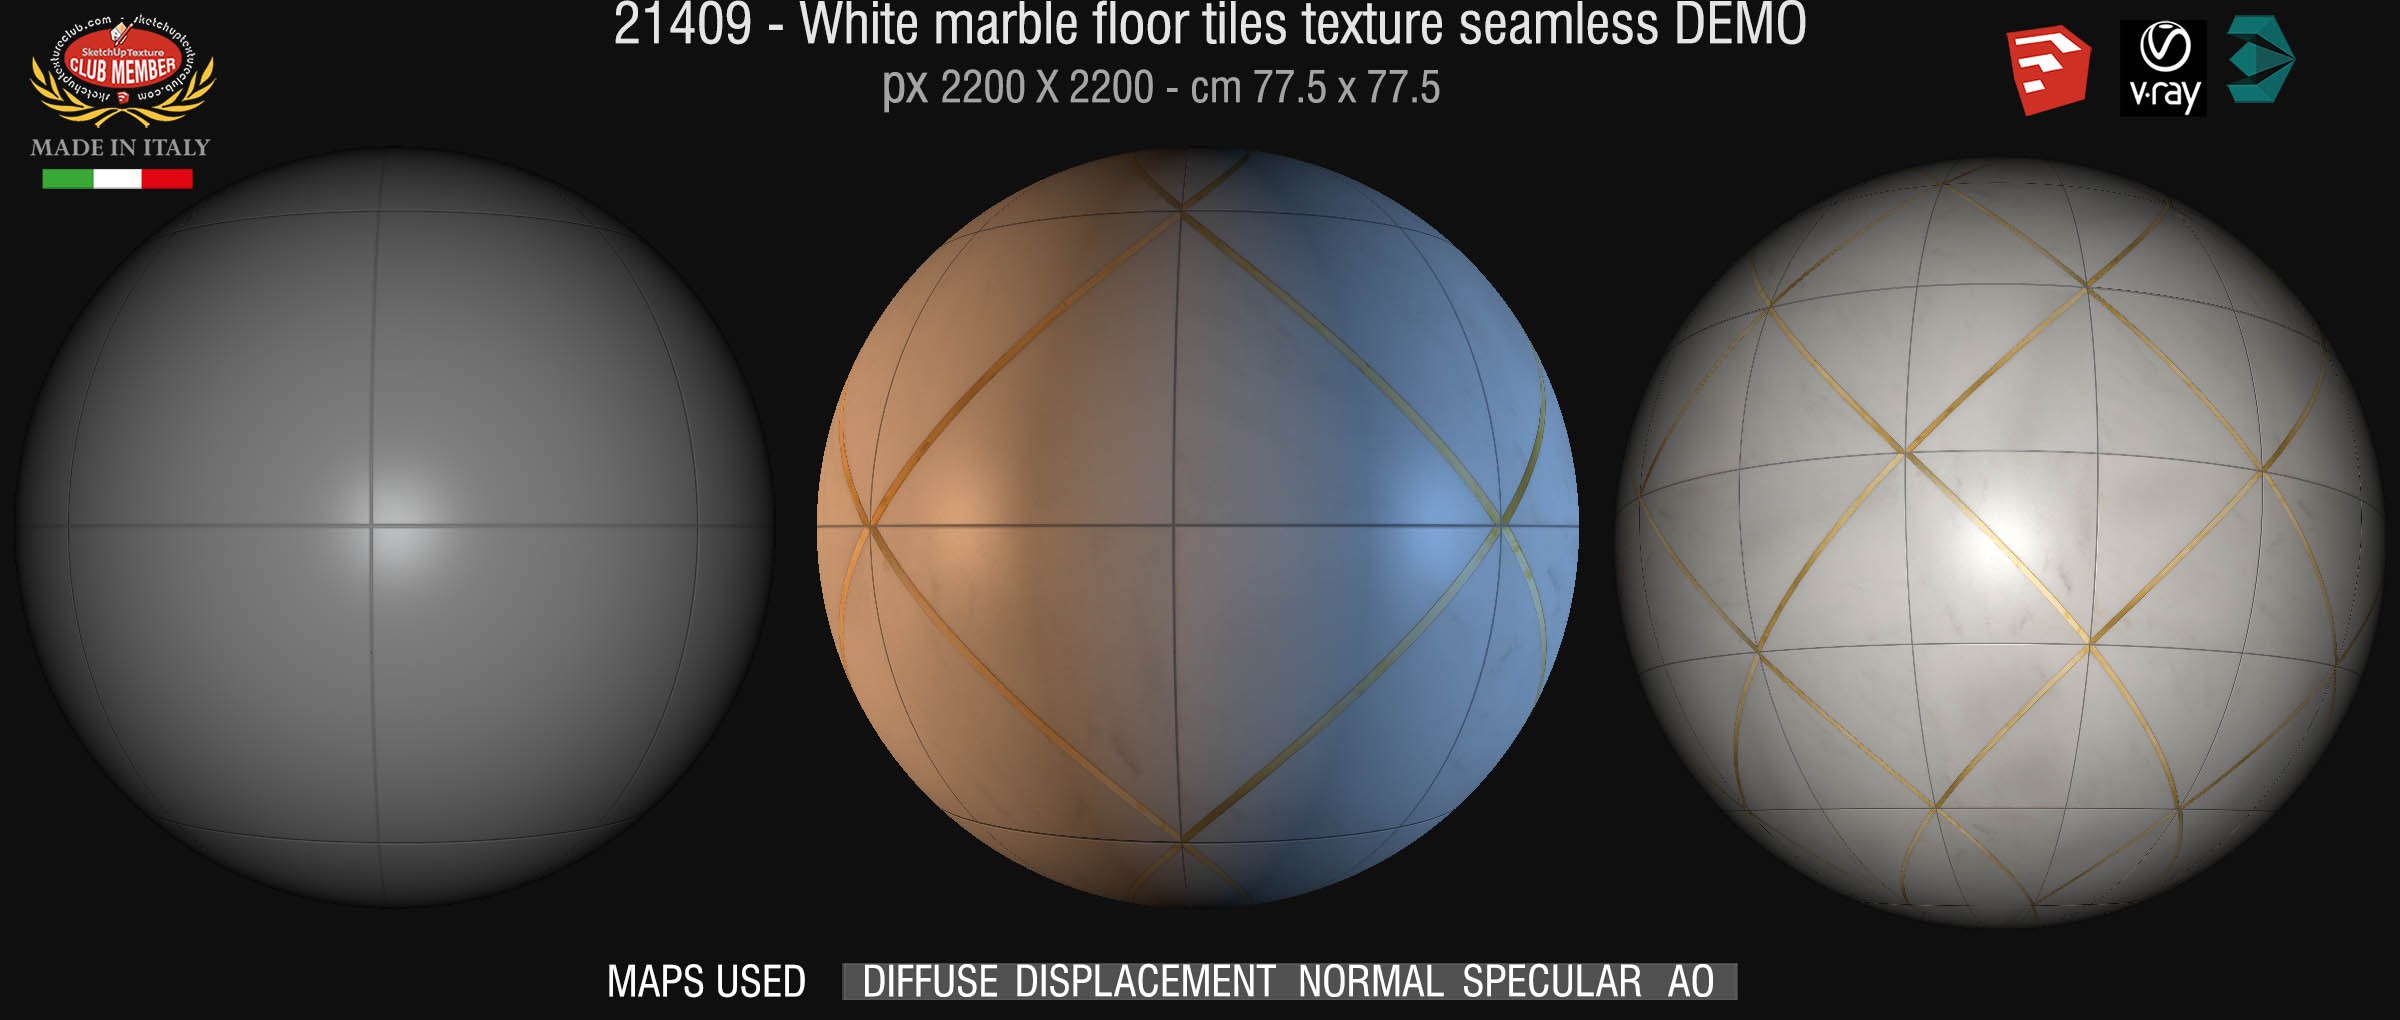 21409 white marble floor tiles texture seamless + maps DEMO